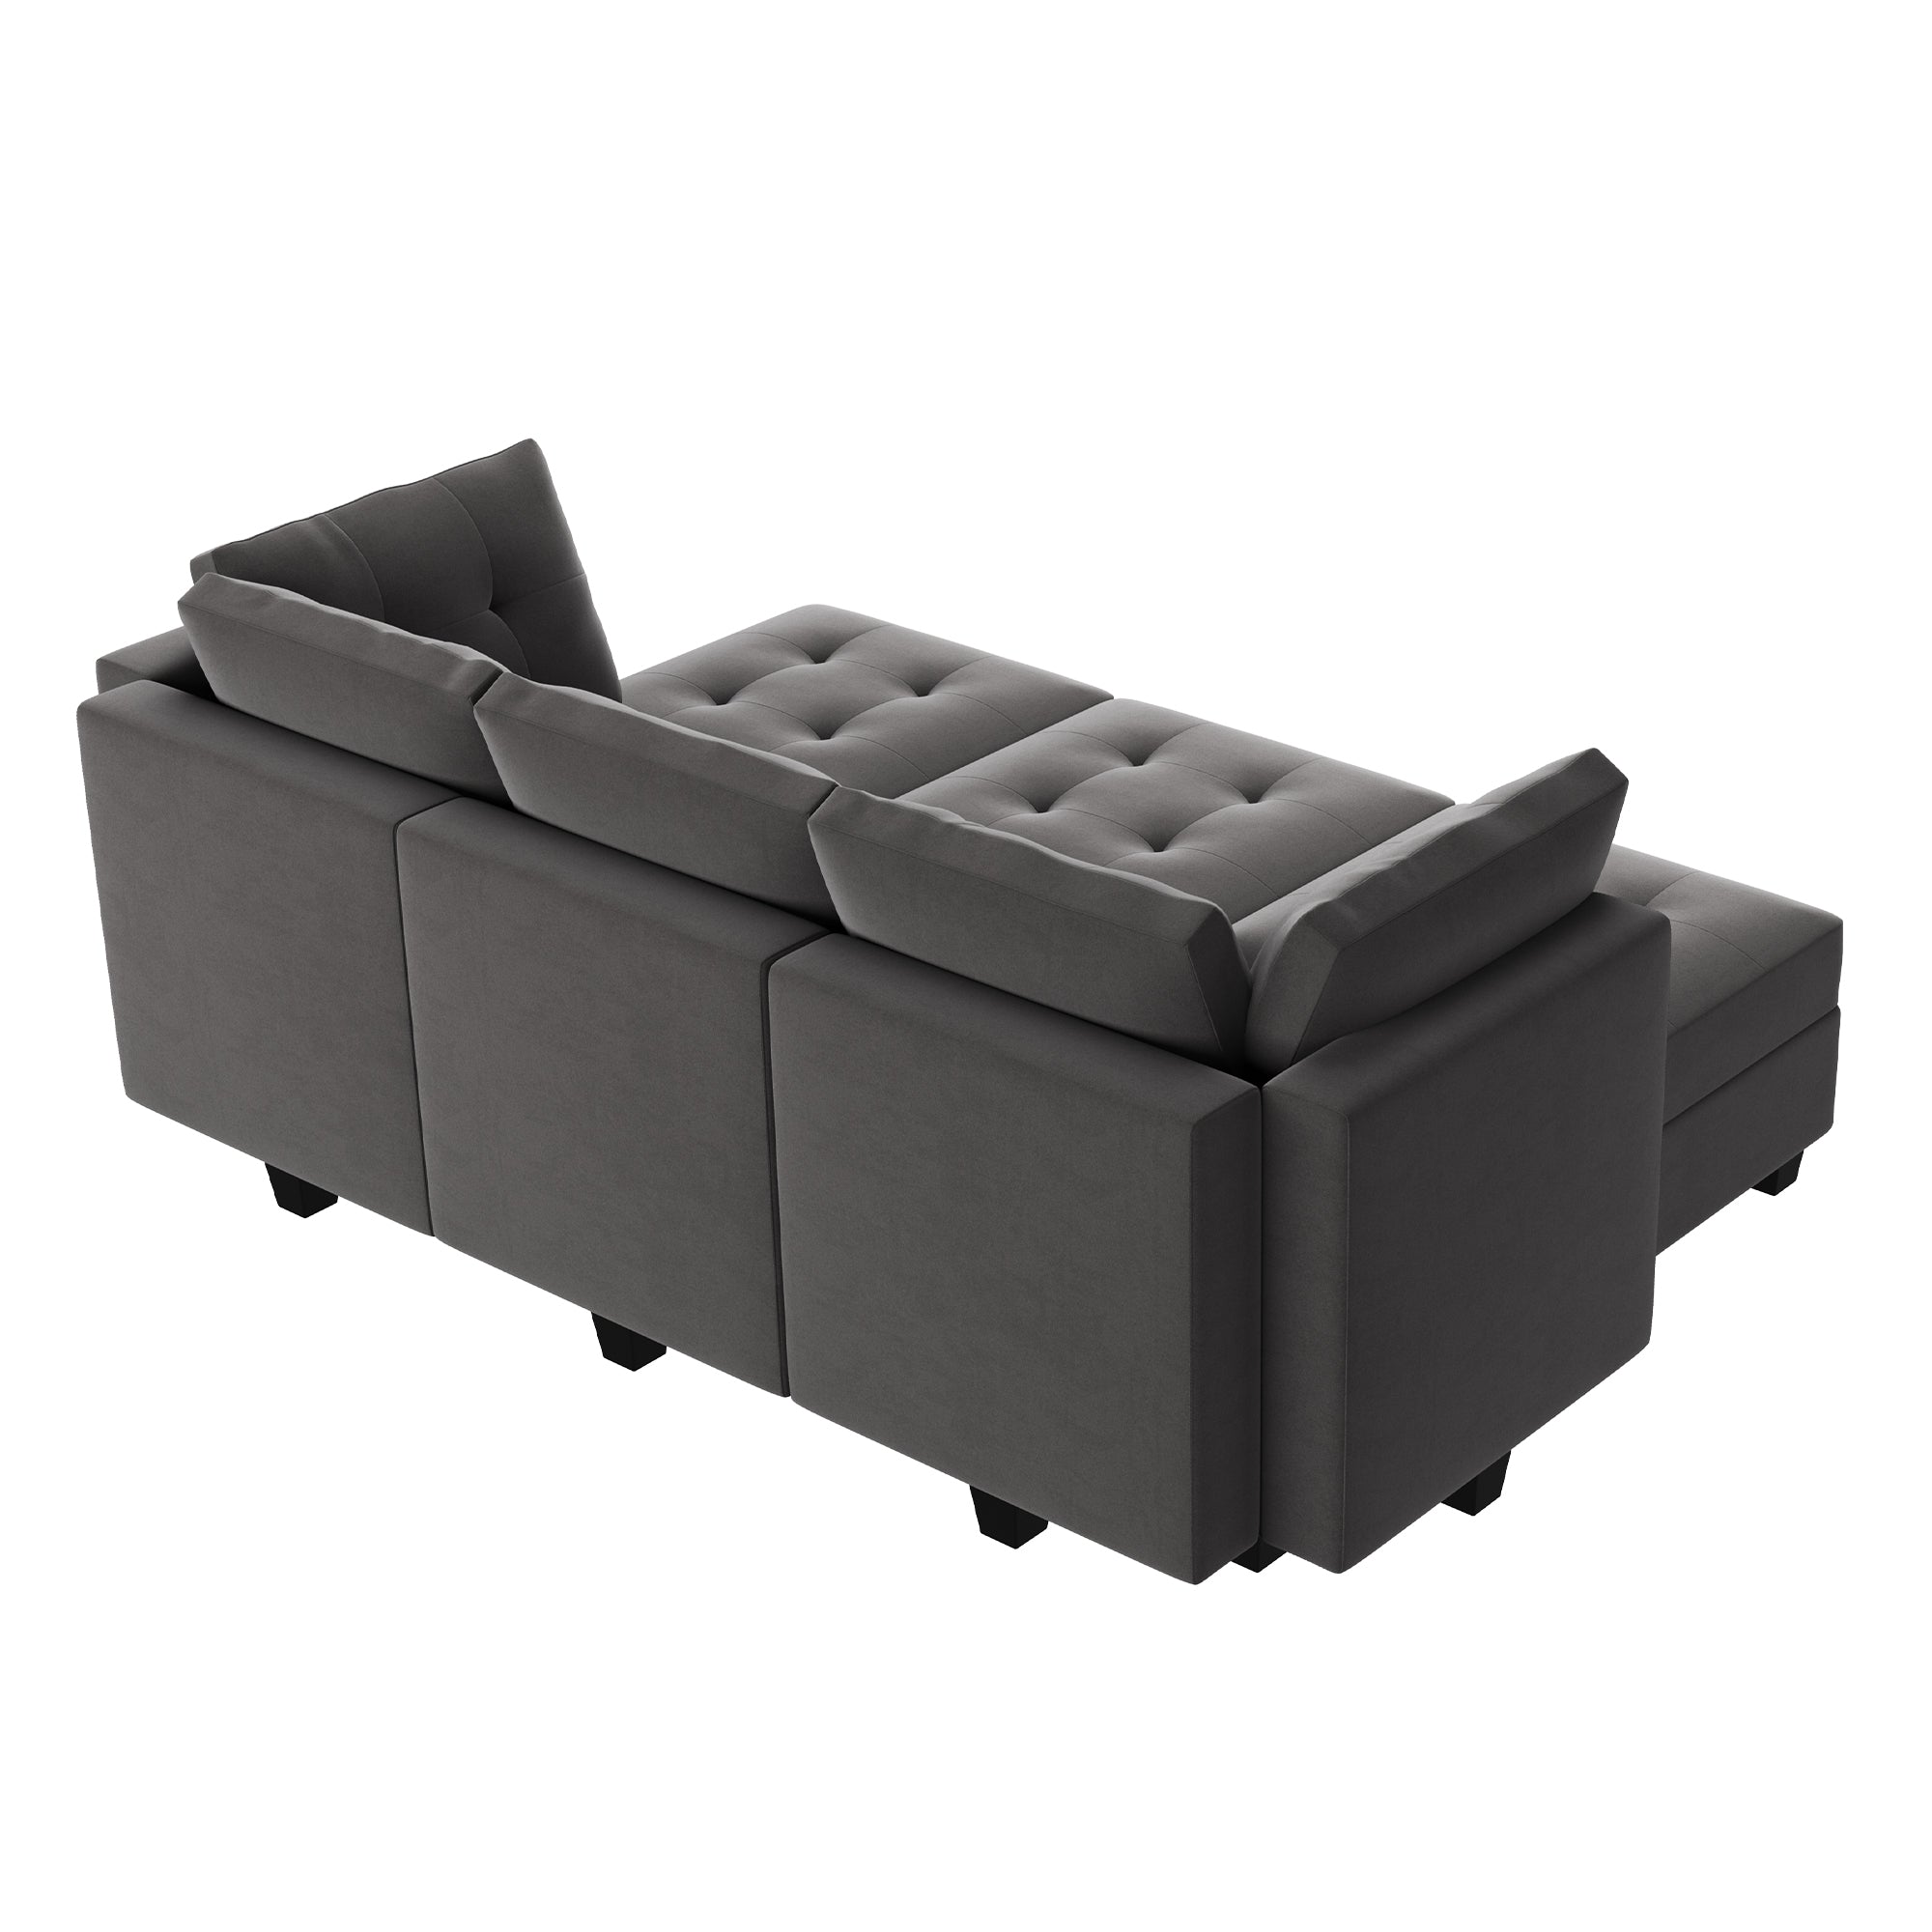 HONBAY 6-Piece Velvet Modular Sleeper Sectional With Storage Seat